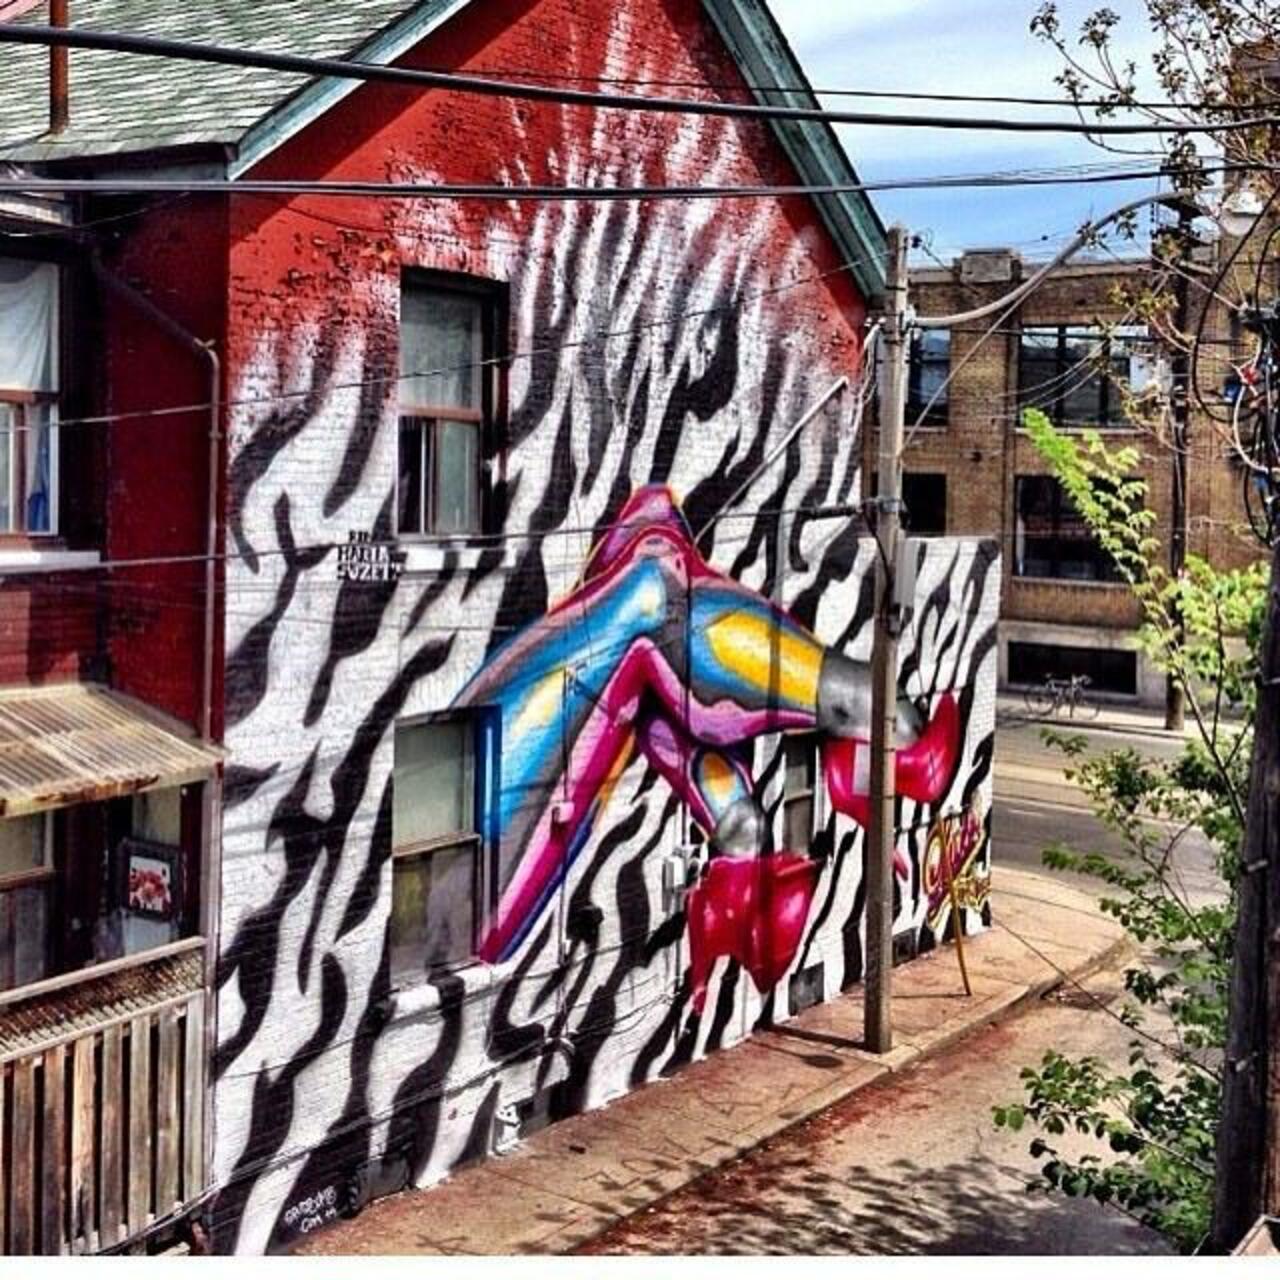 #graffitiporn #torontograffiti  #spud1 #graffiti  #spudbomb  #mtn #mtncans #mtncolors  #streetart  #spud1OTM #stree… http://t.co/kioCO90lzd